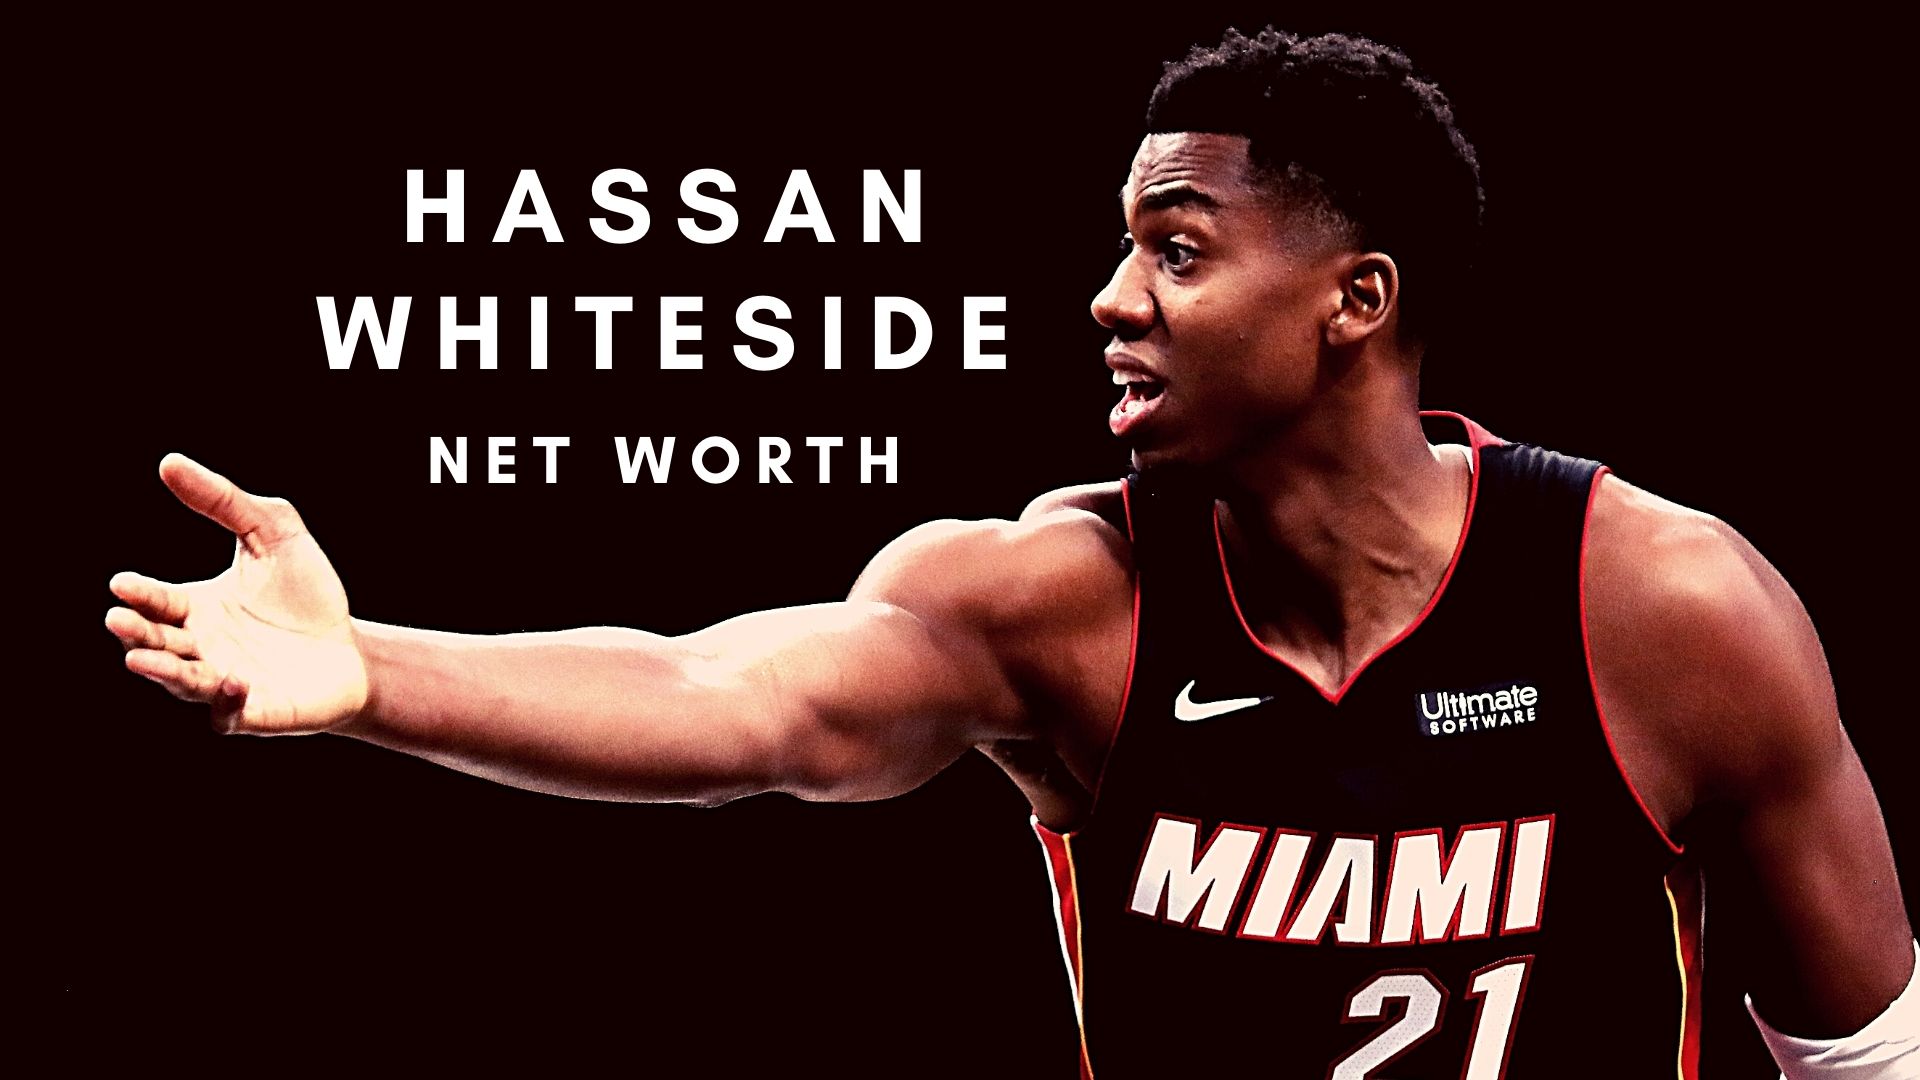 Hassan Whiteside Net Worth